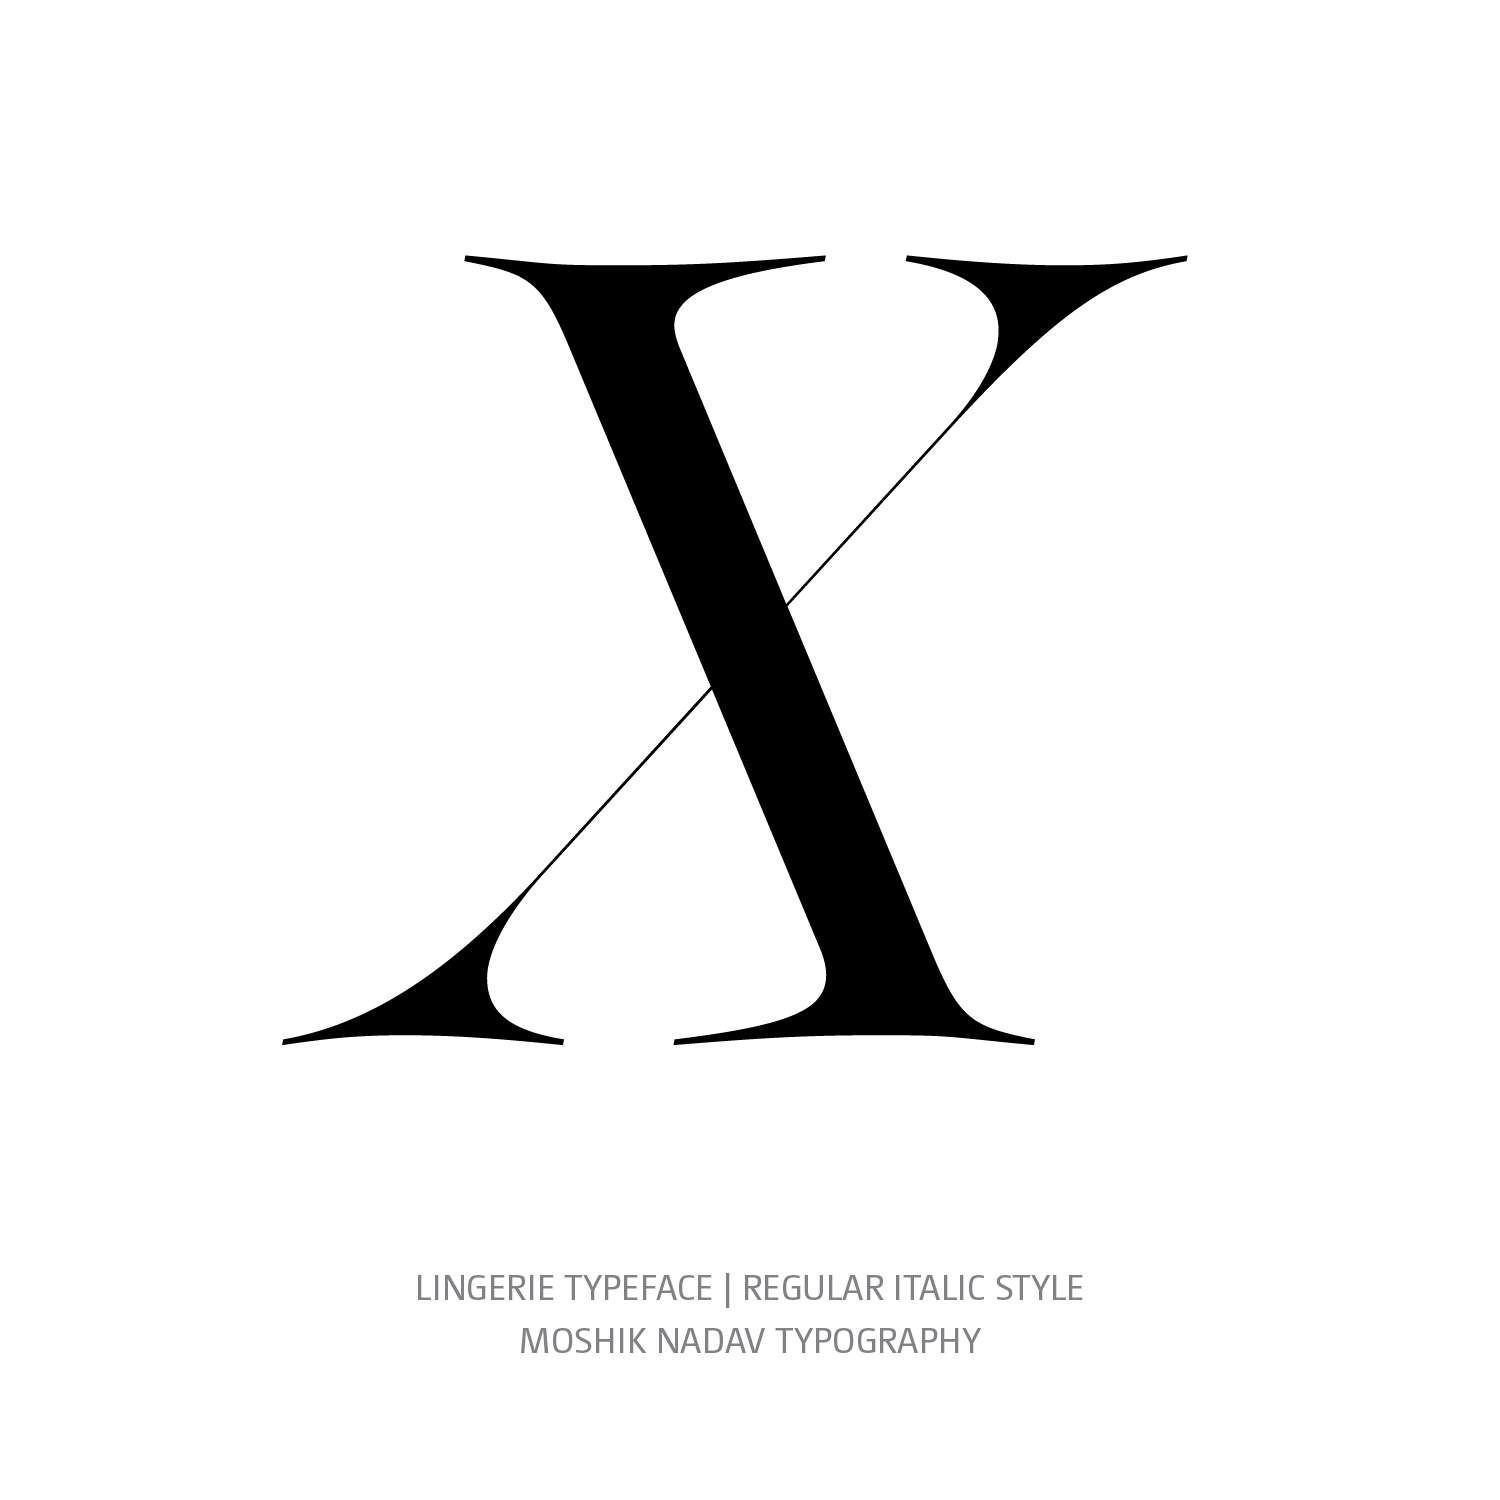 Lingerie Typeface Regular Italic X - Fashion fonts by Moshik Nadav Typography